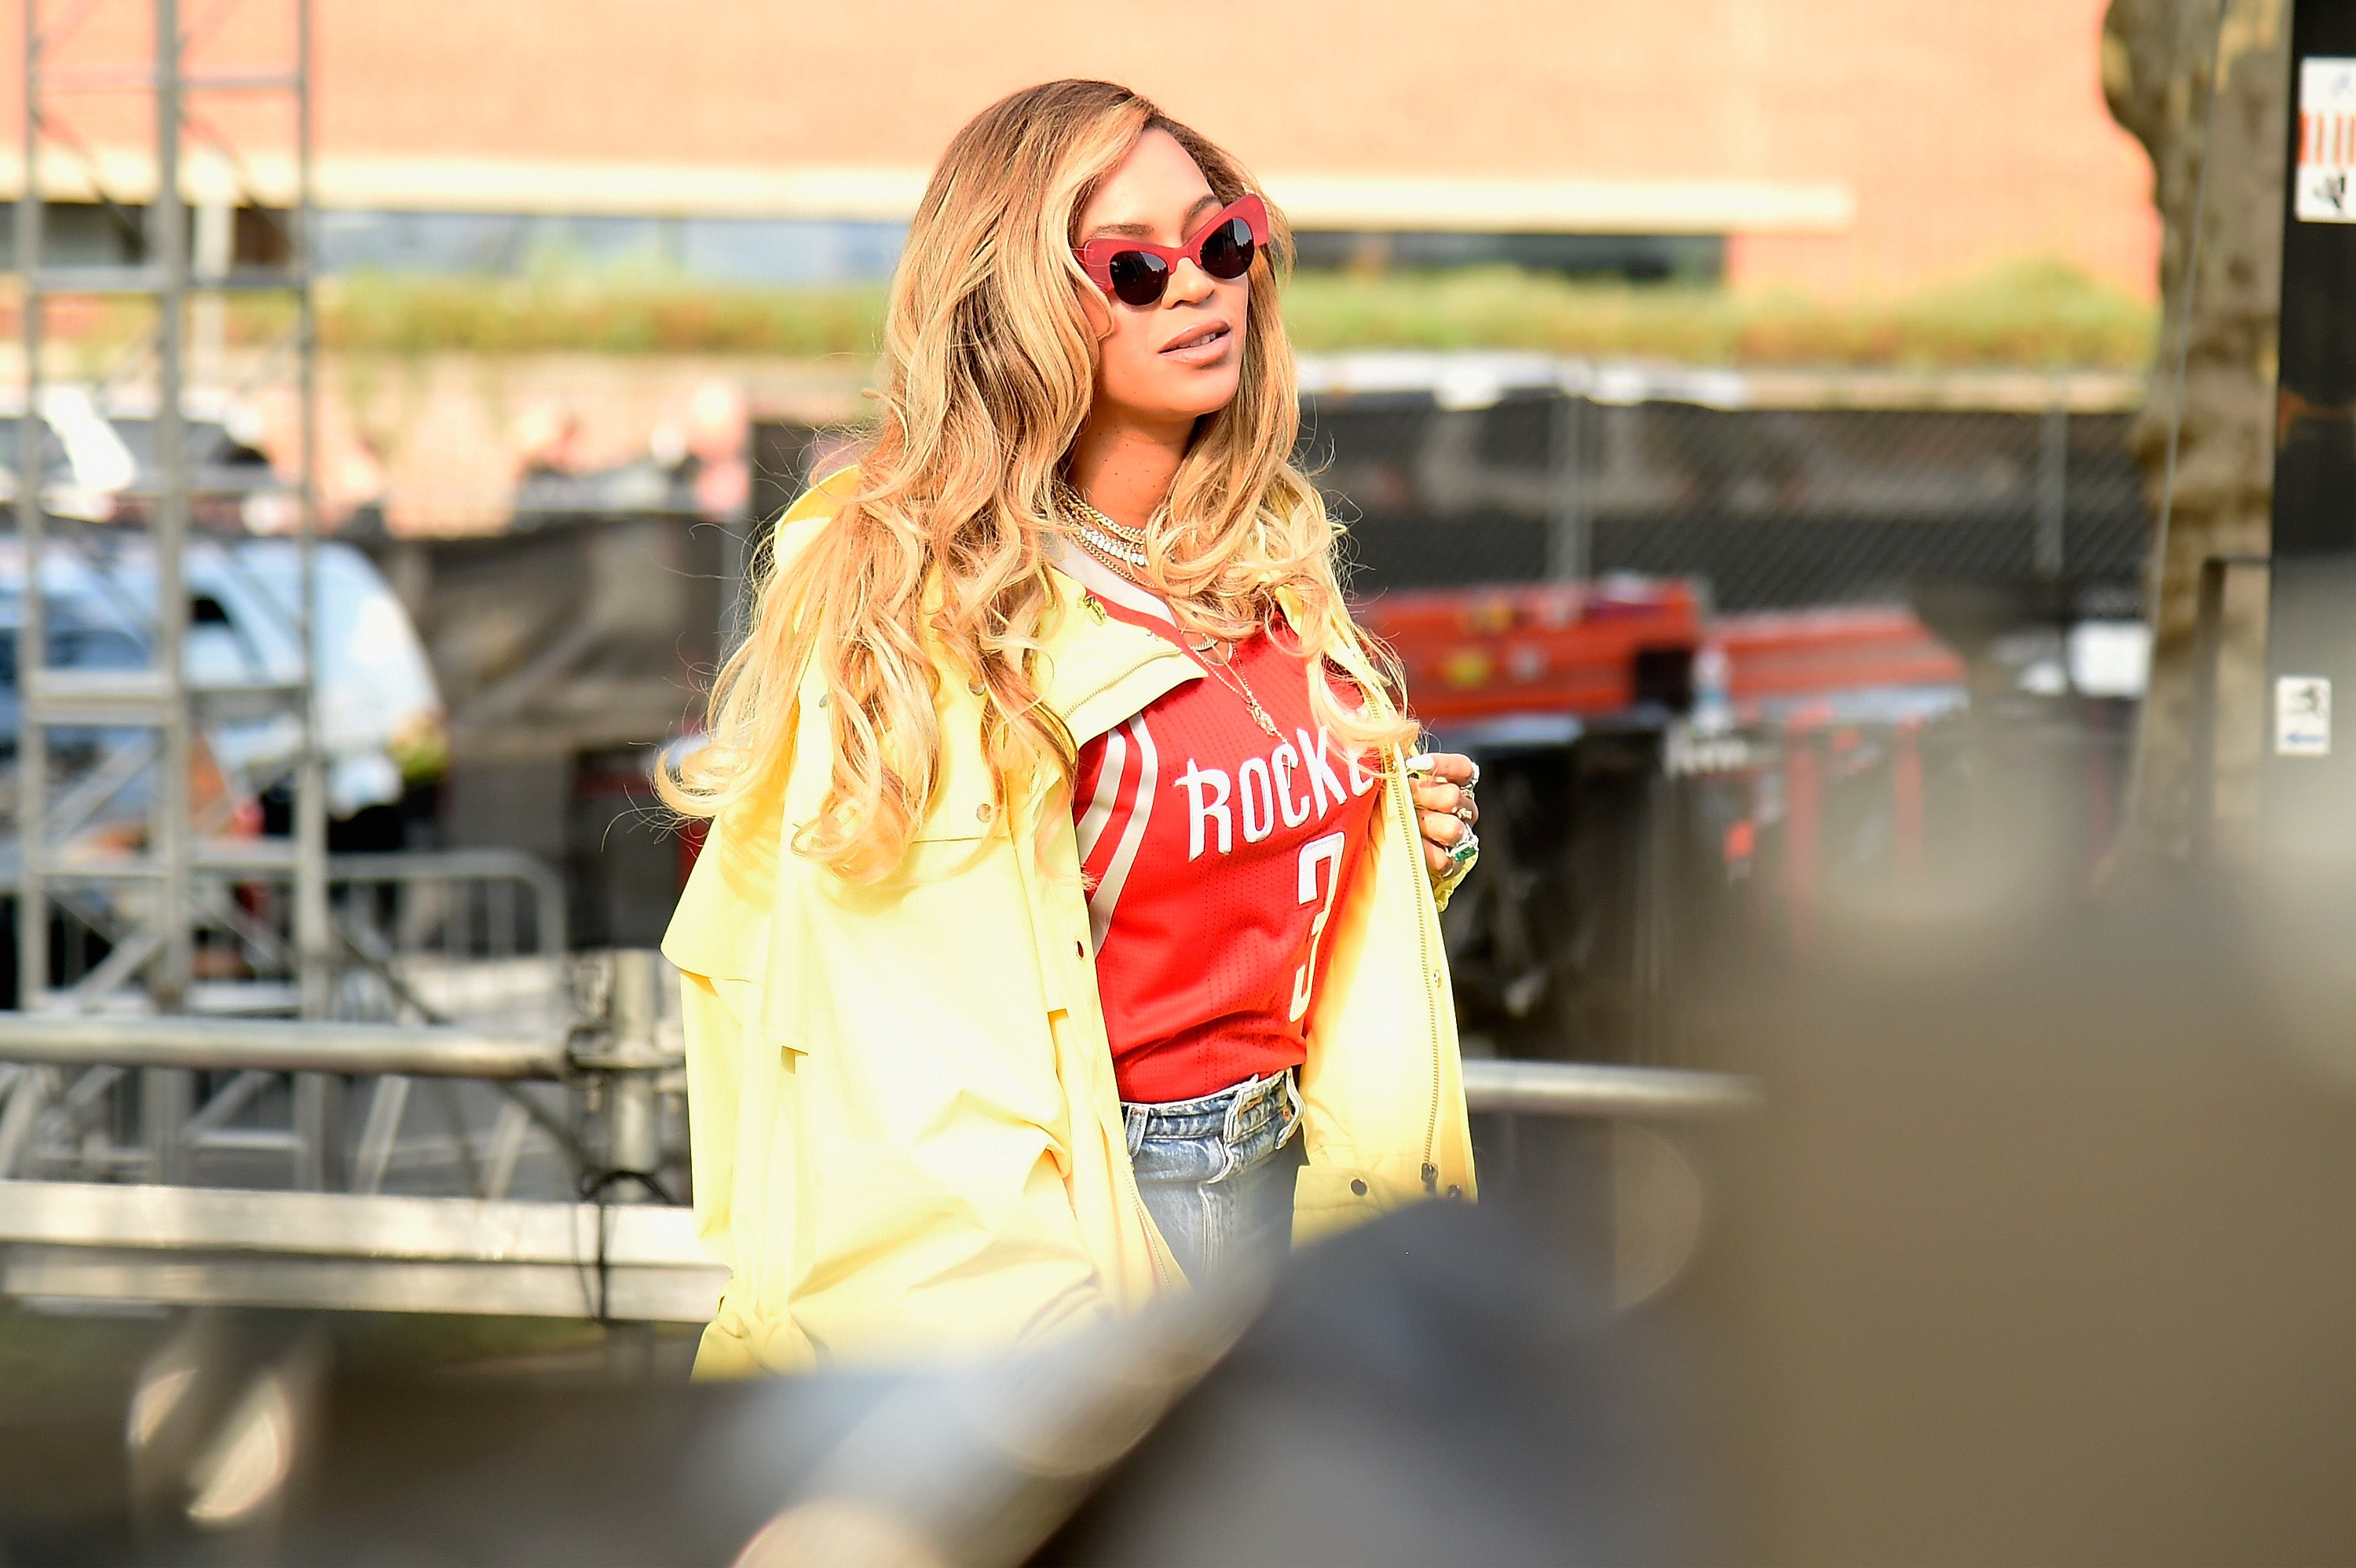 Beyoncé's 2017 Hair Evolution Is Already Epic
